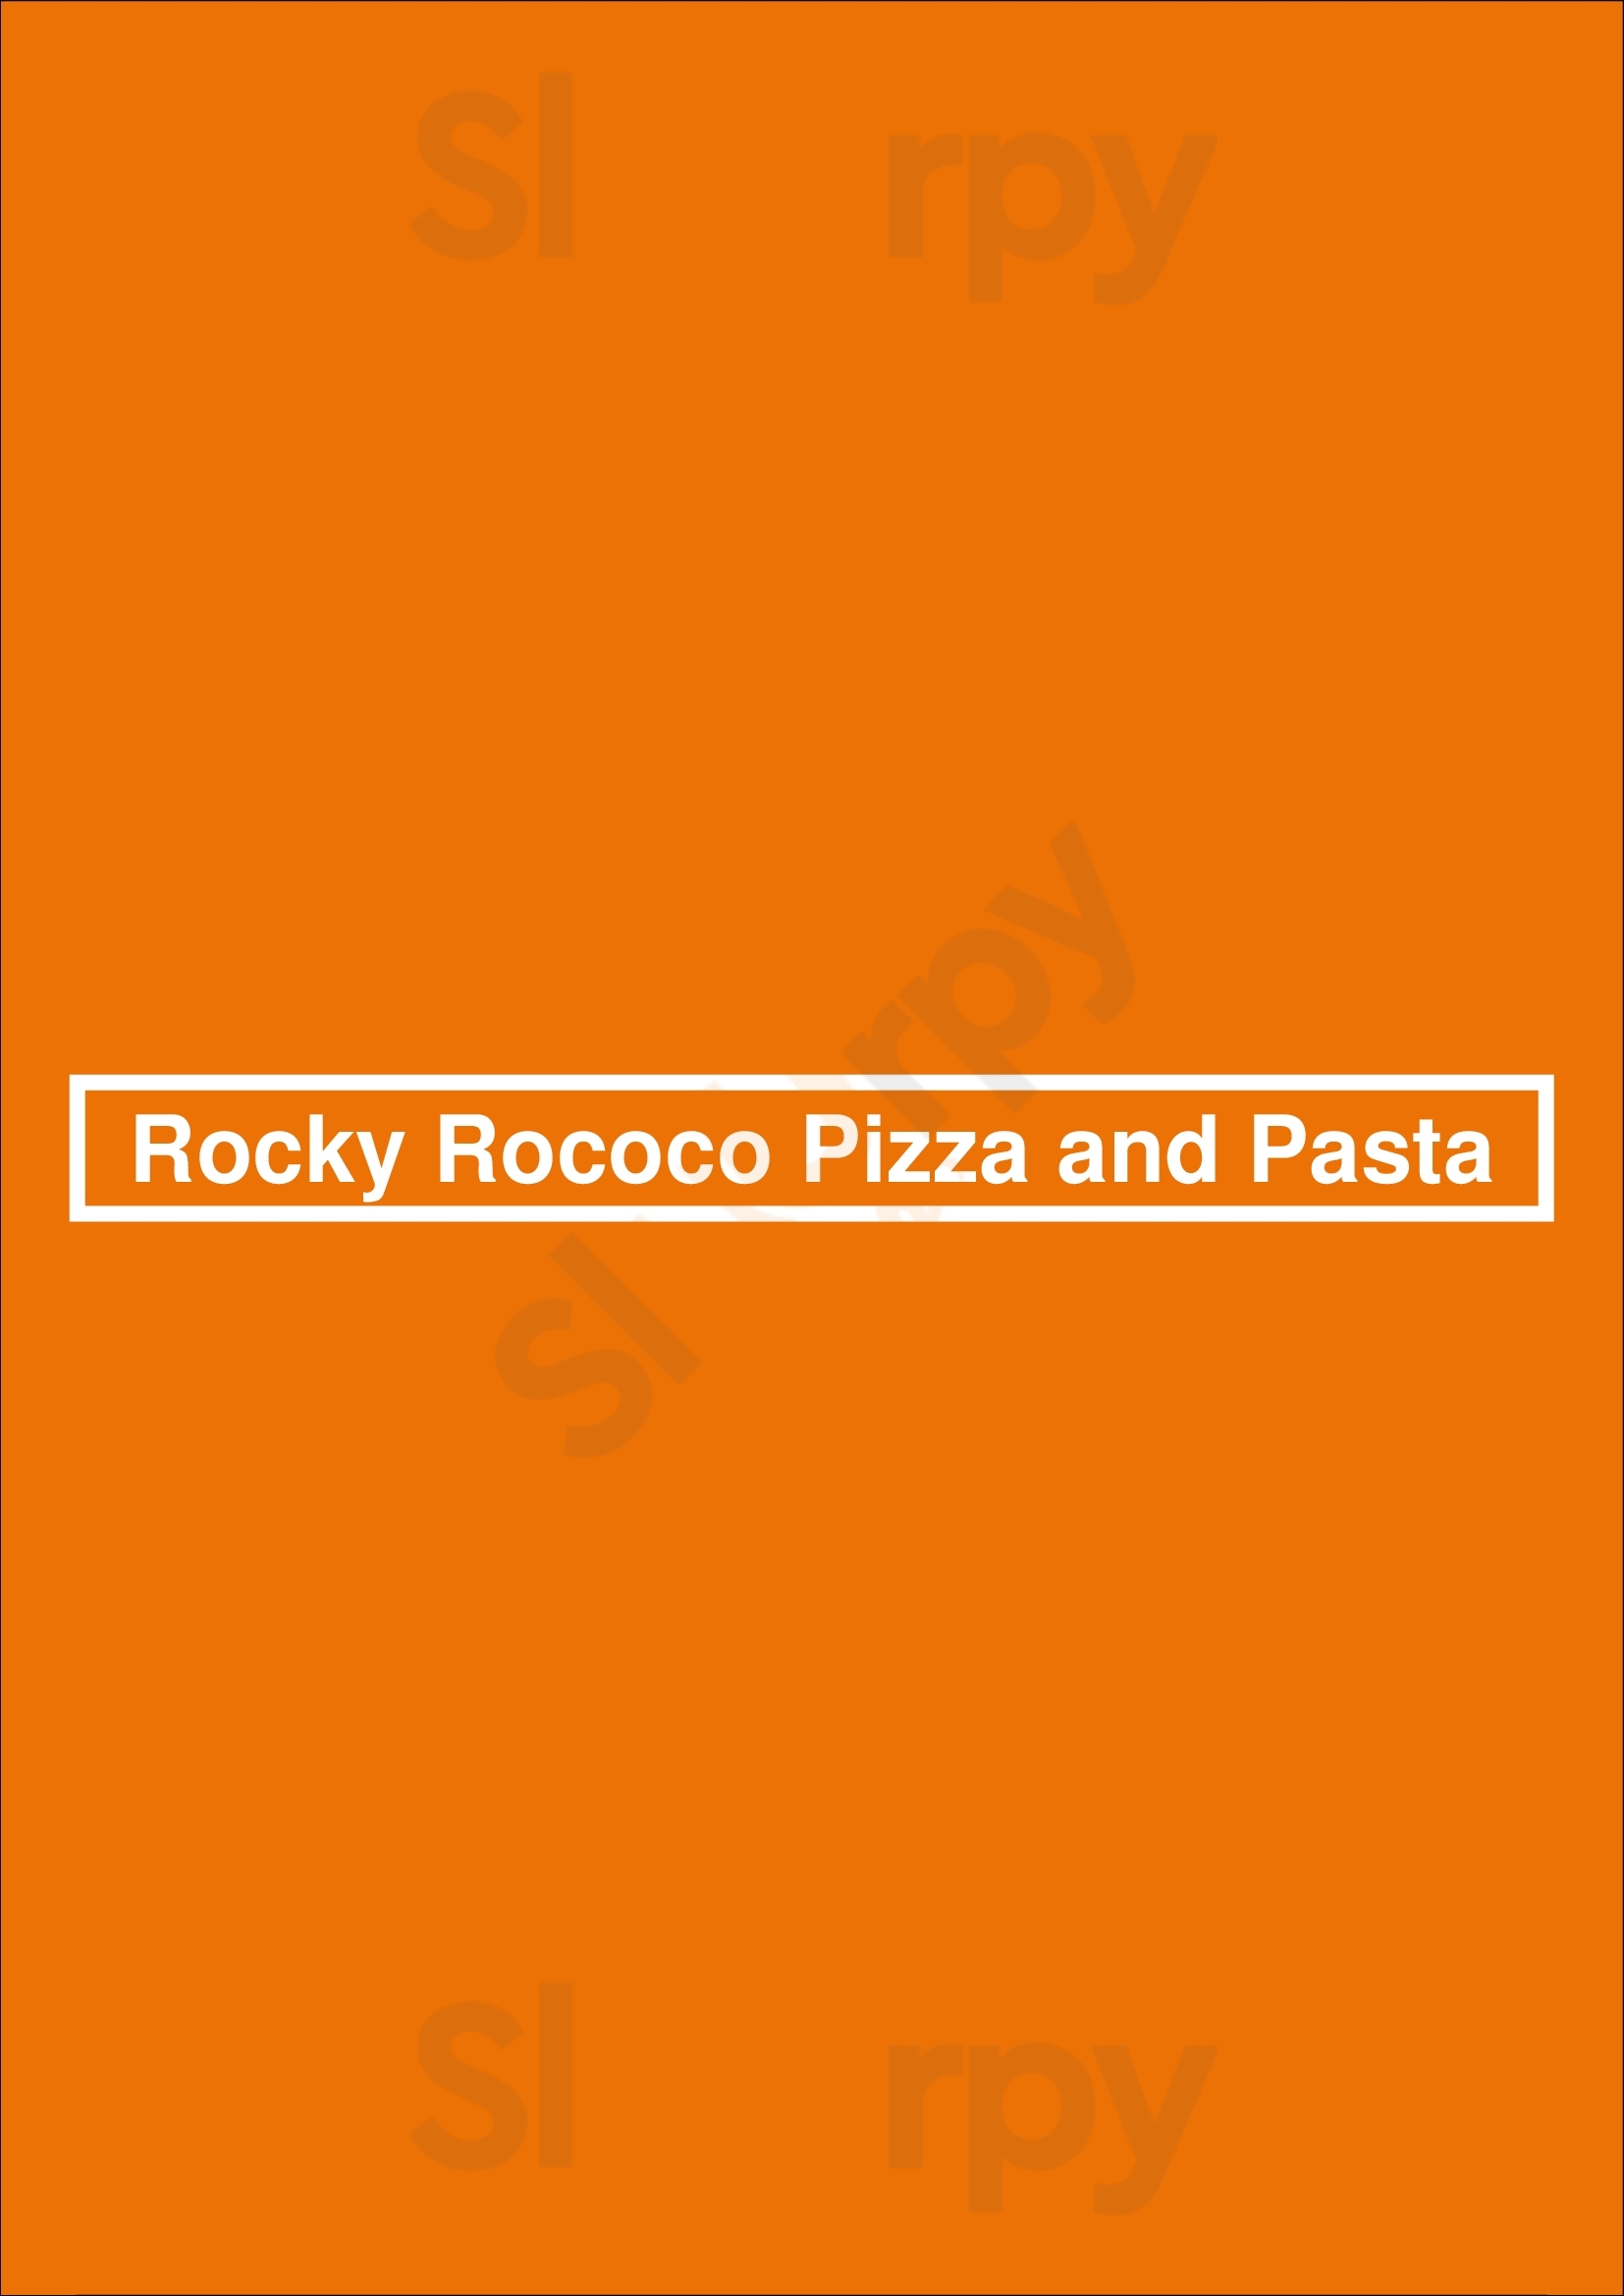 Rocky Rococo Pizza And Pasta Milwaukee Menu - 1